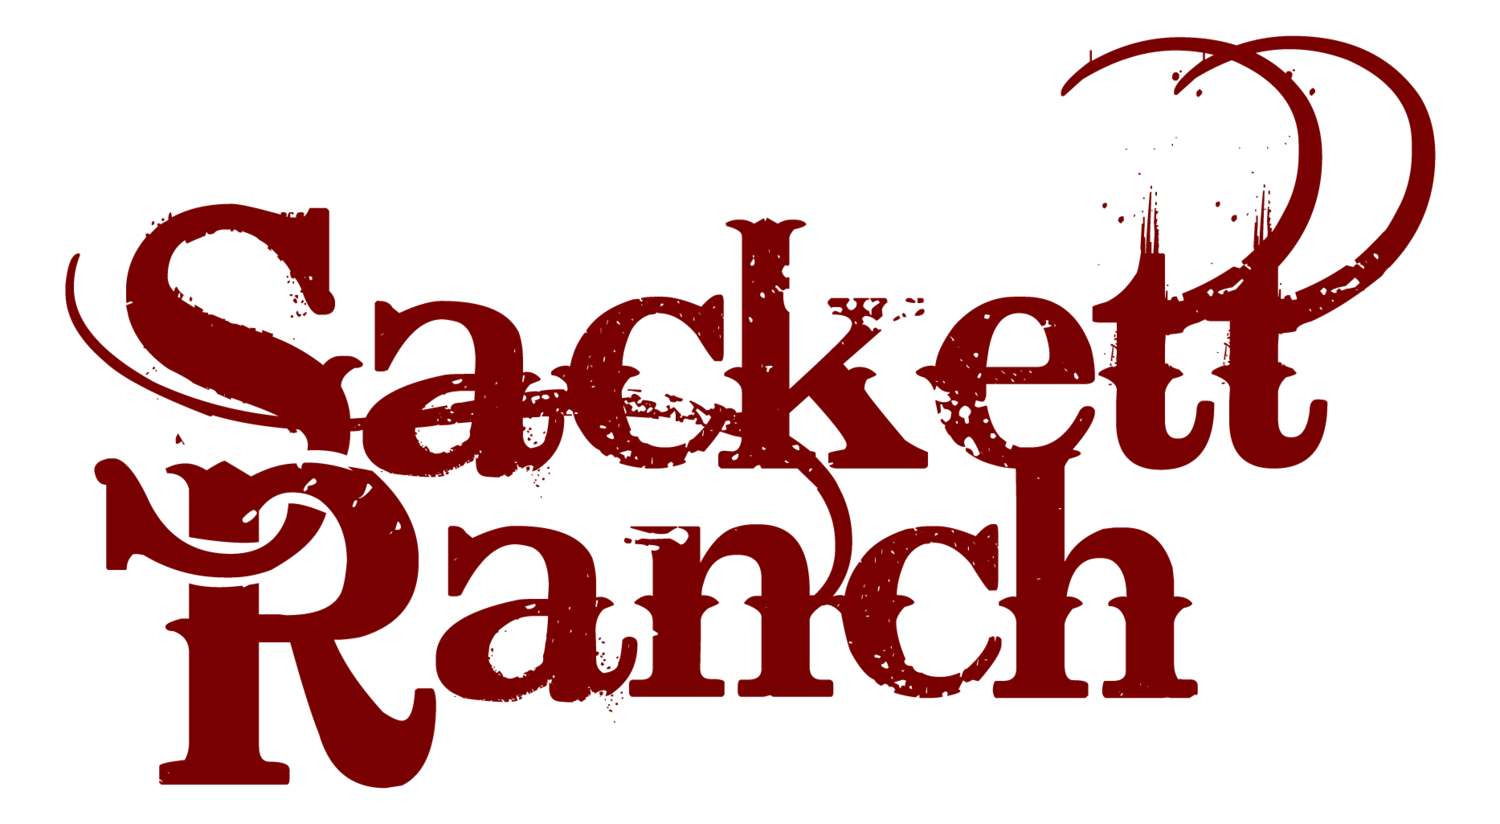 Sackett Ranch